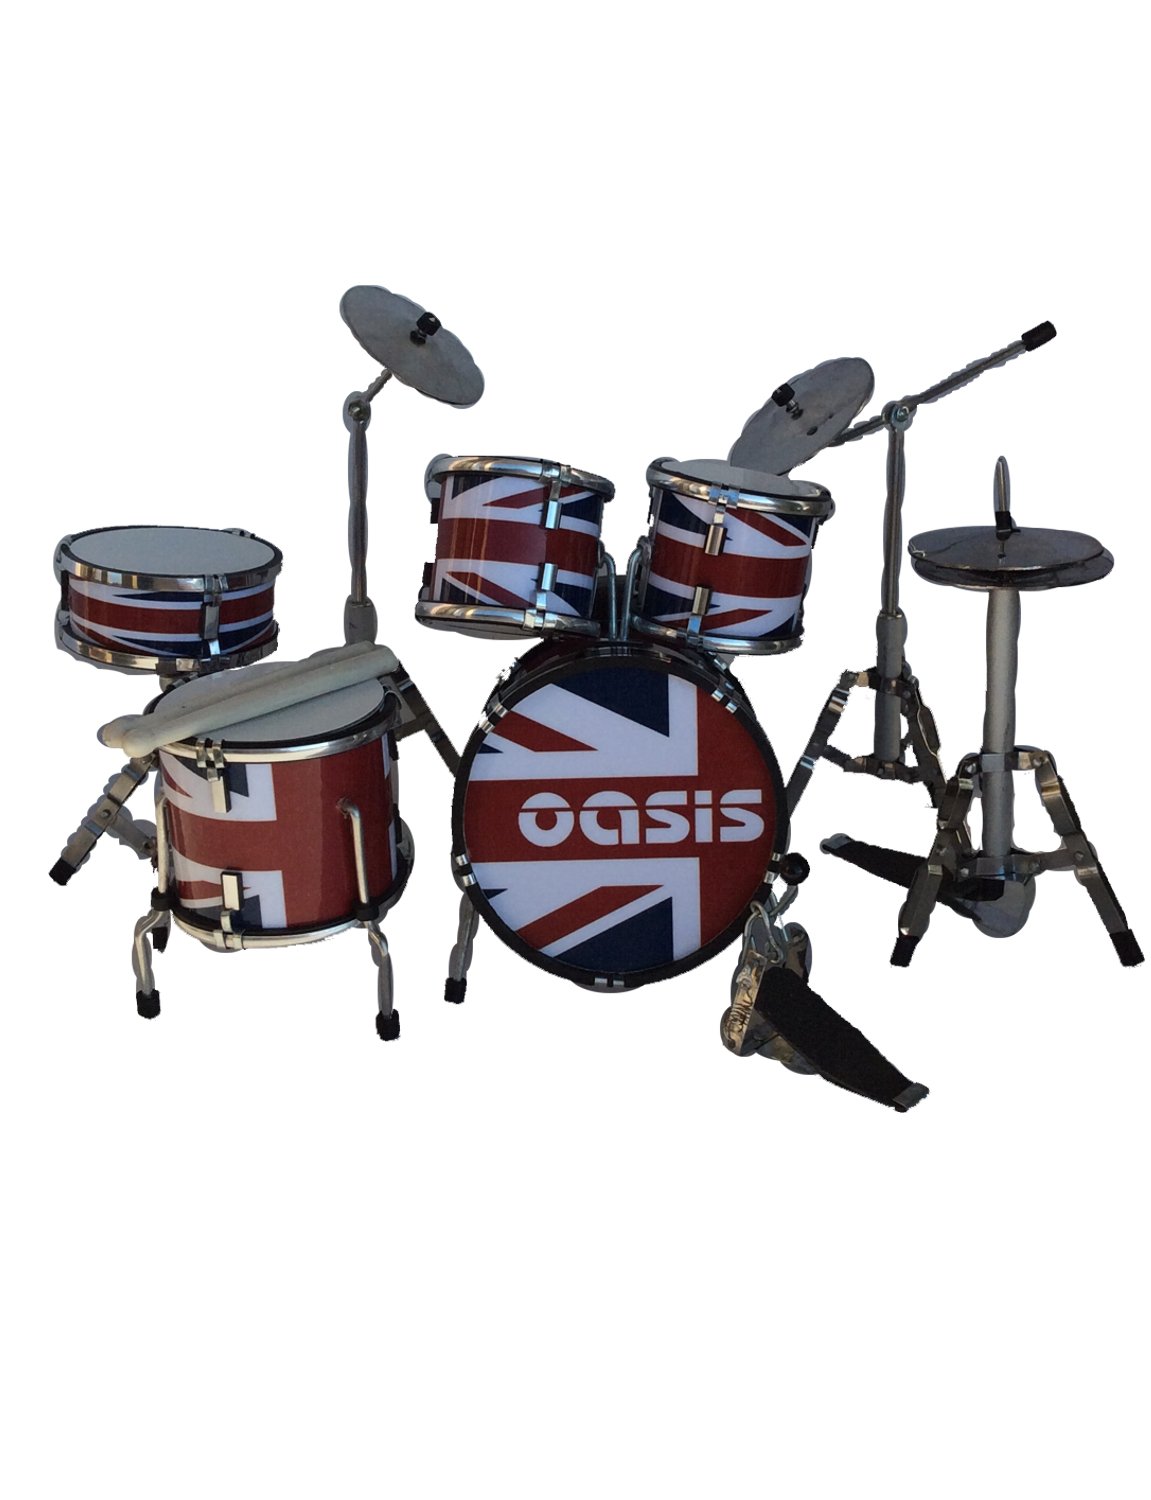 Oasis miniature drum set decorative